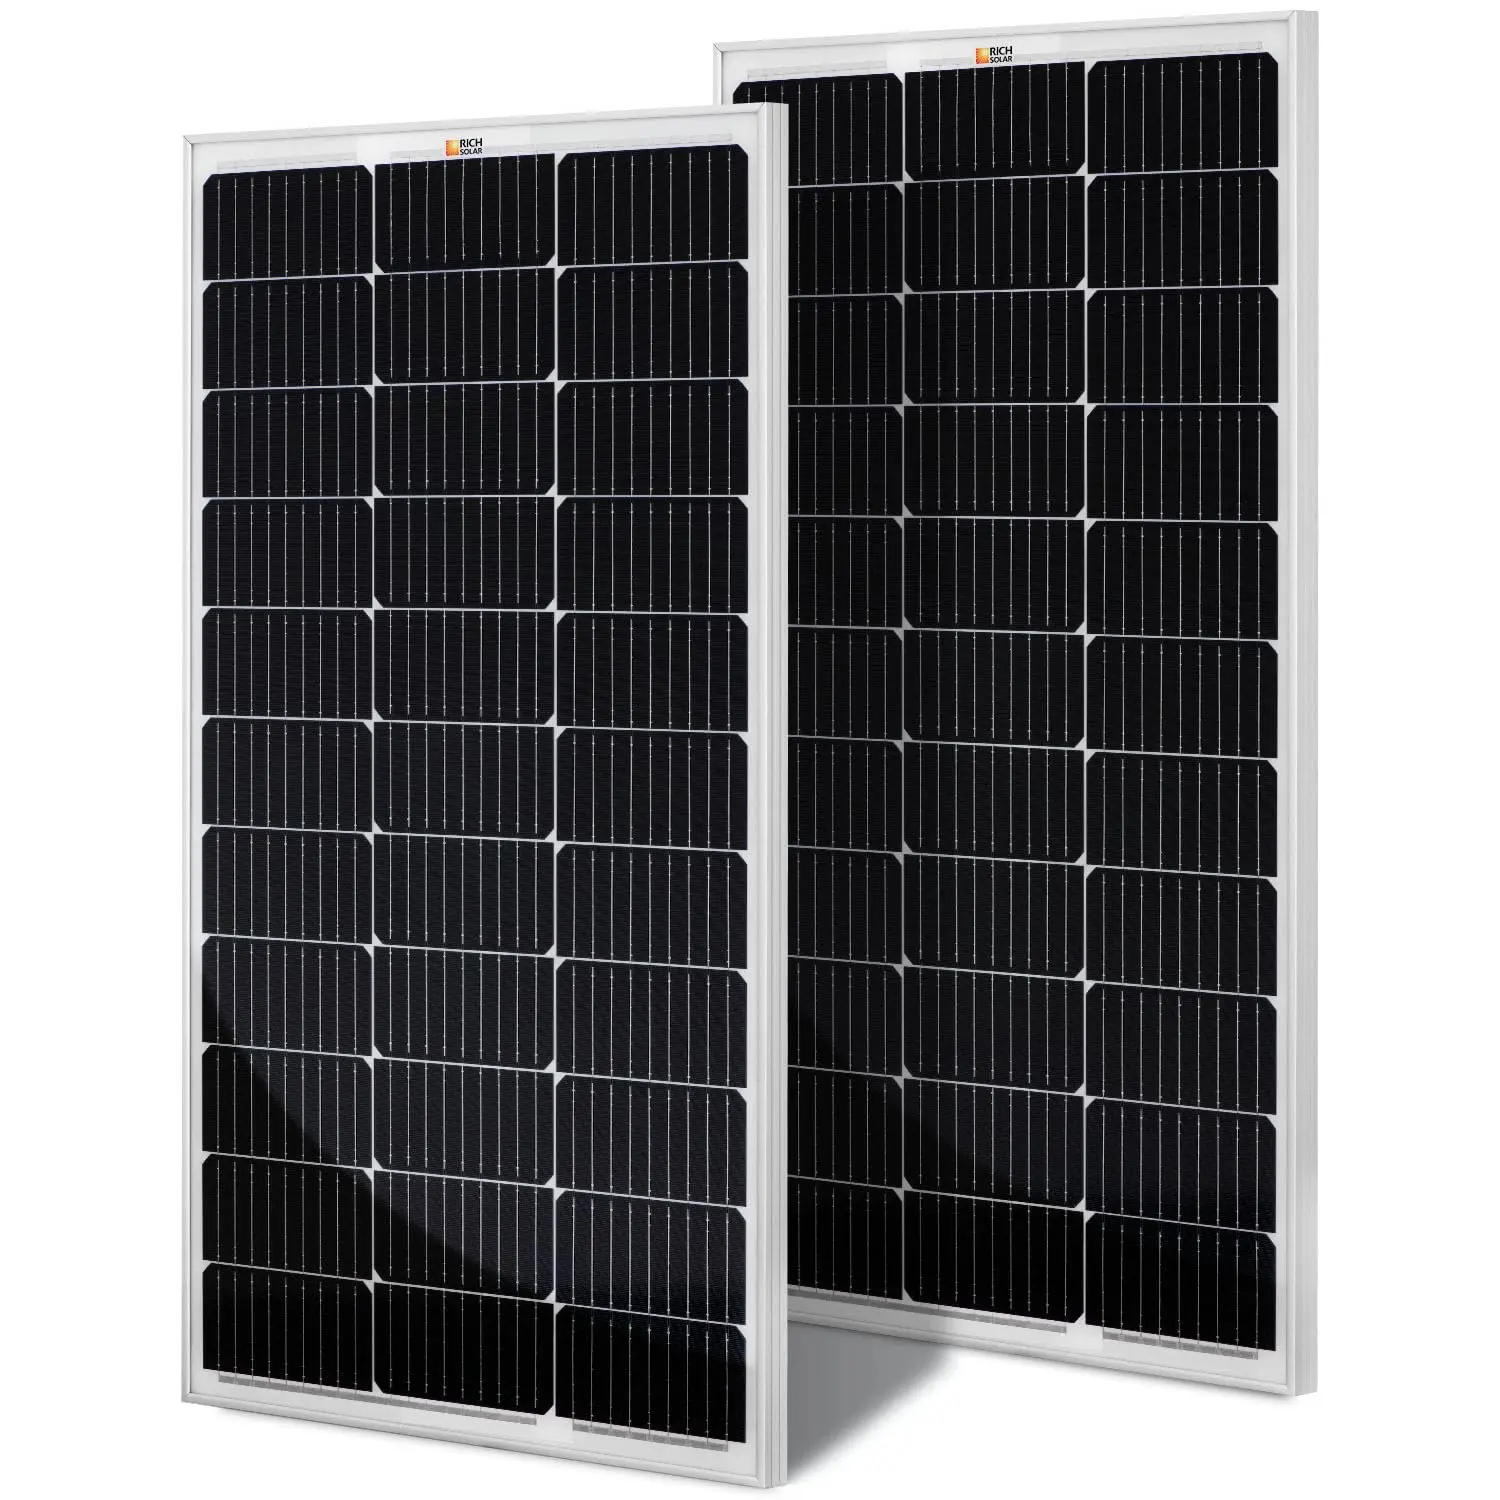 200 watt monocrystalline solar panel - What is the size of a 200W monocrystalline solar panel